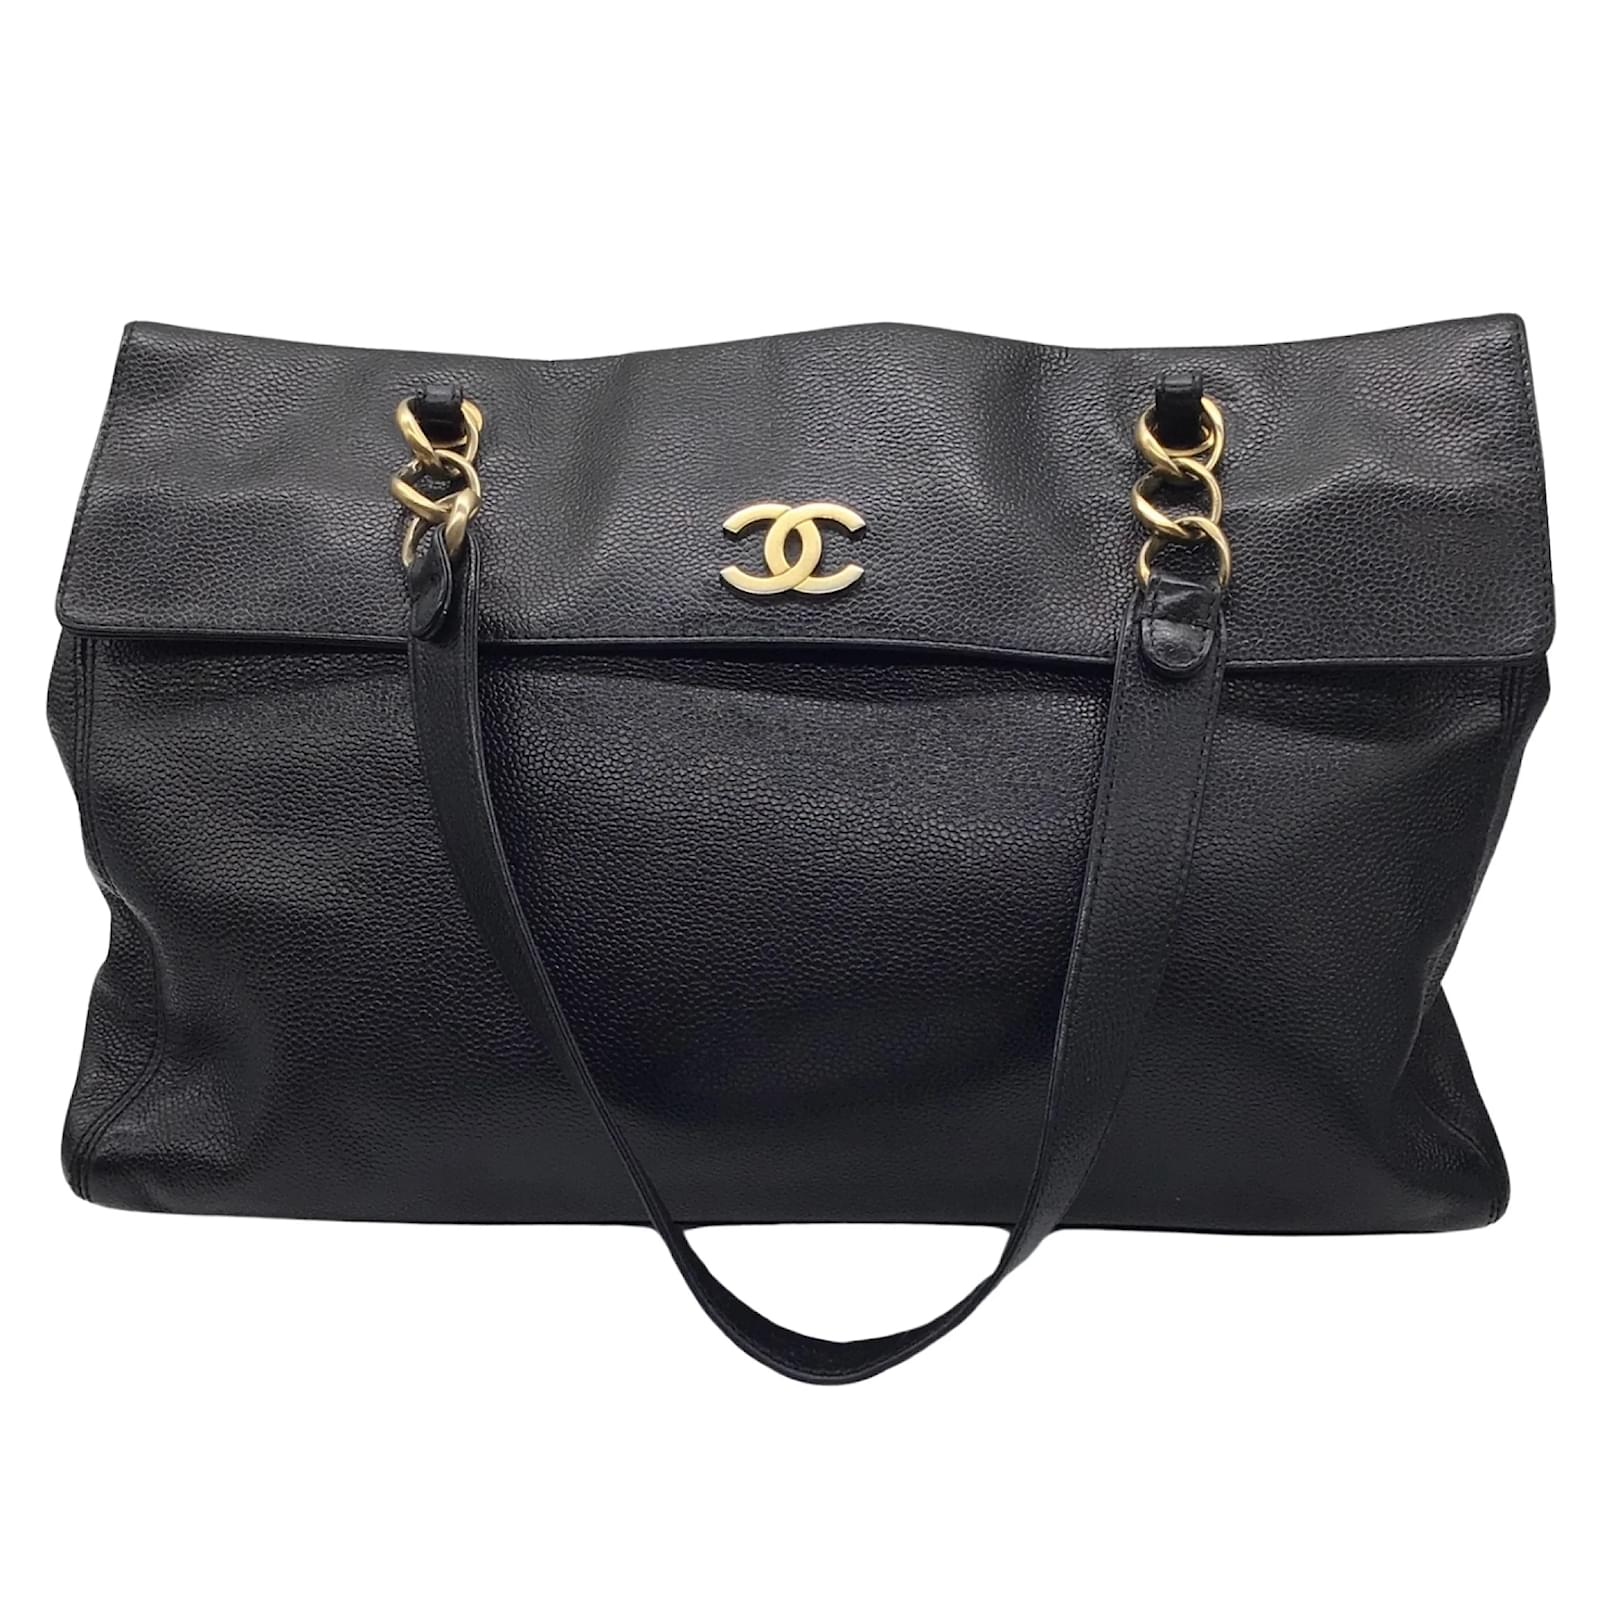 Handbags Chanel Chanel Black / Gold Caviar Leather Executive Tote